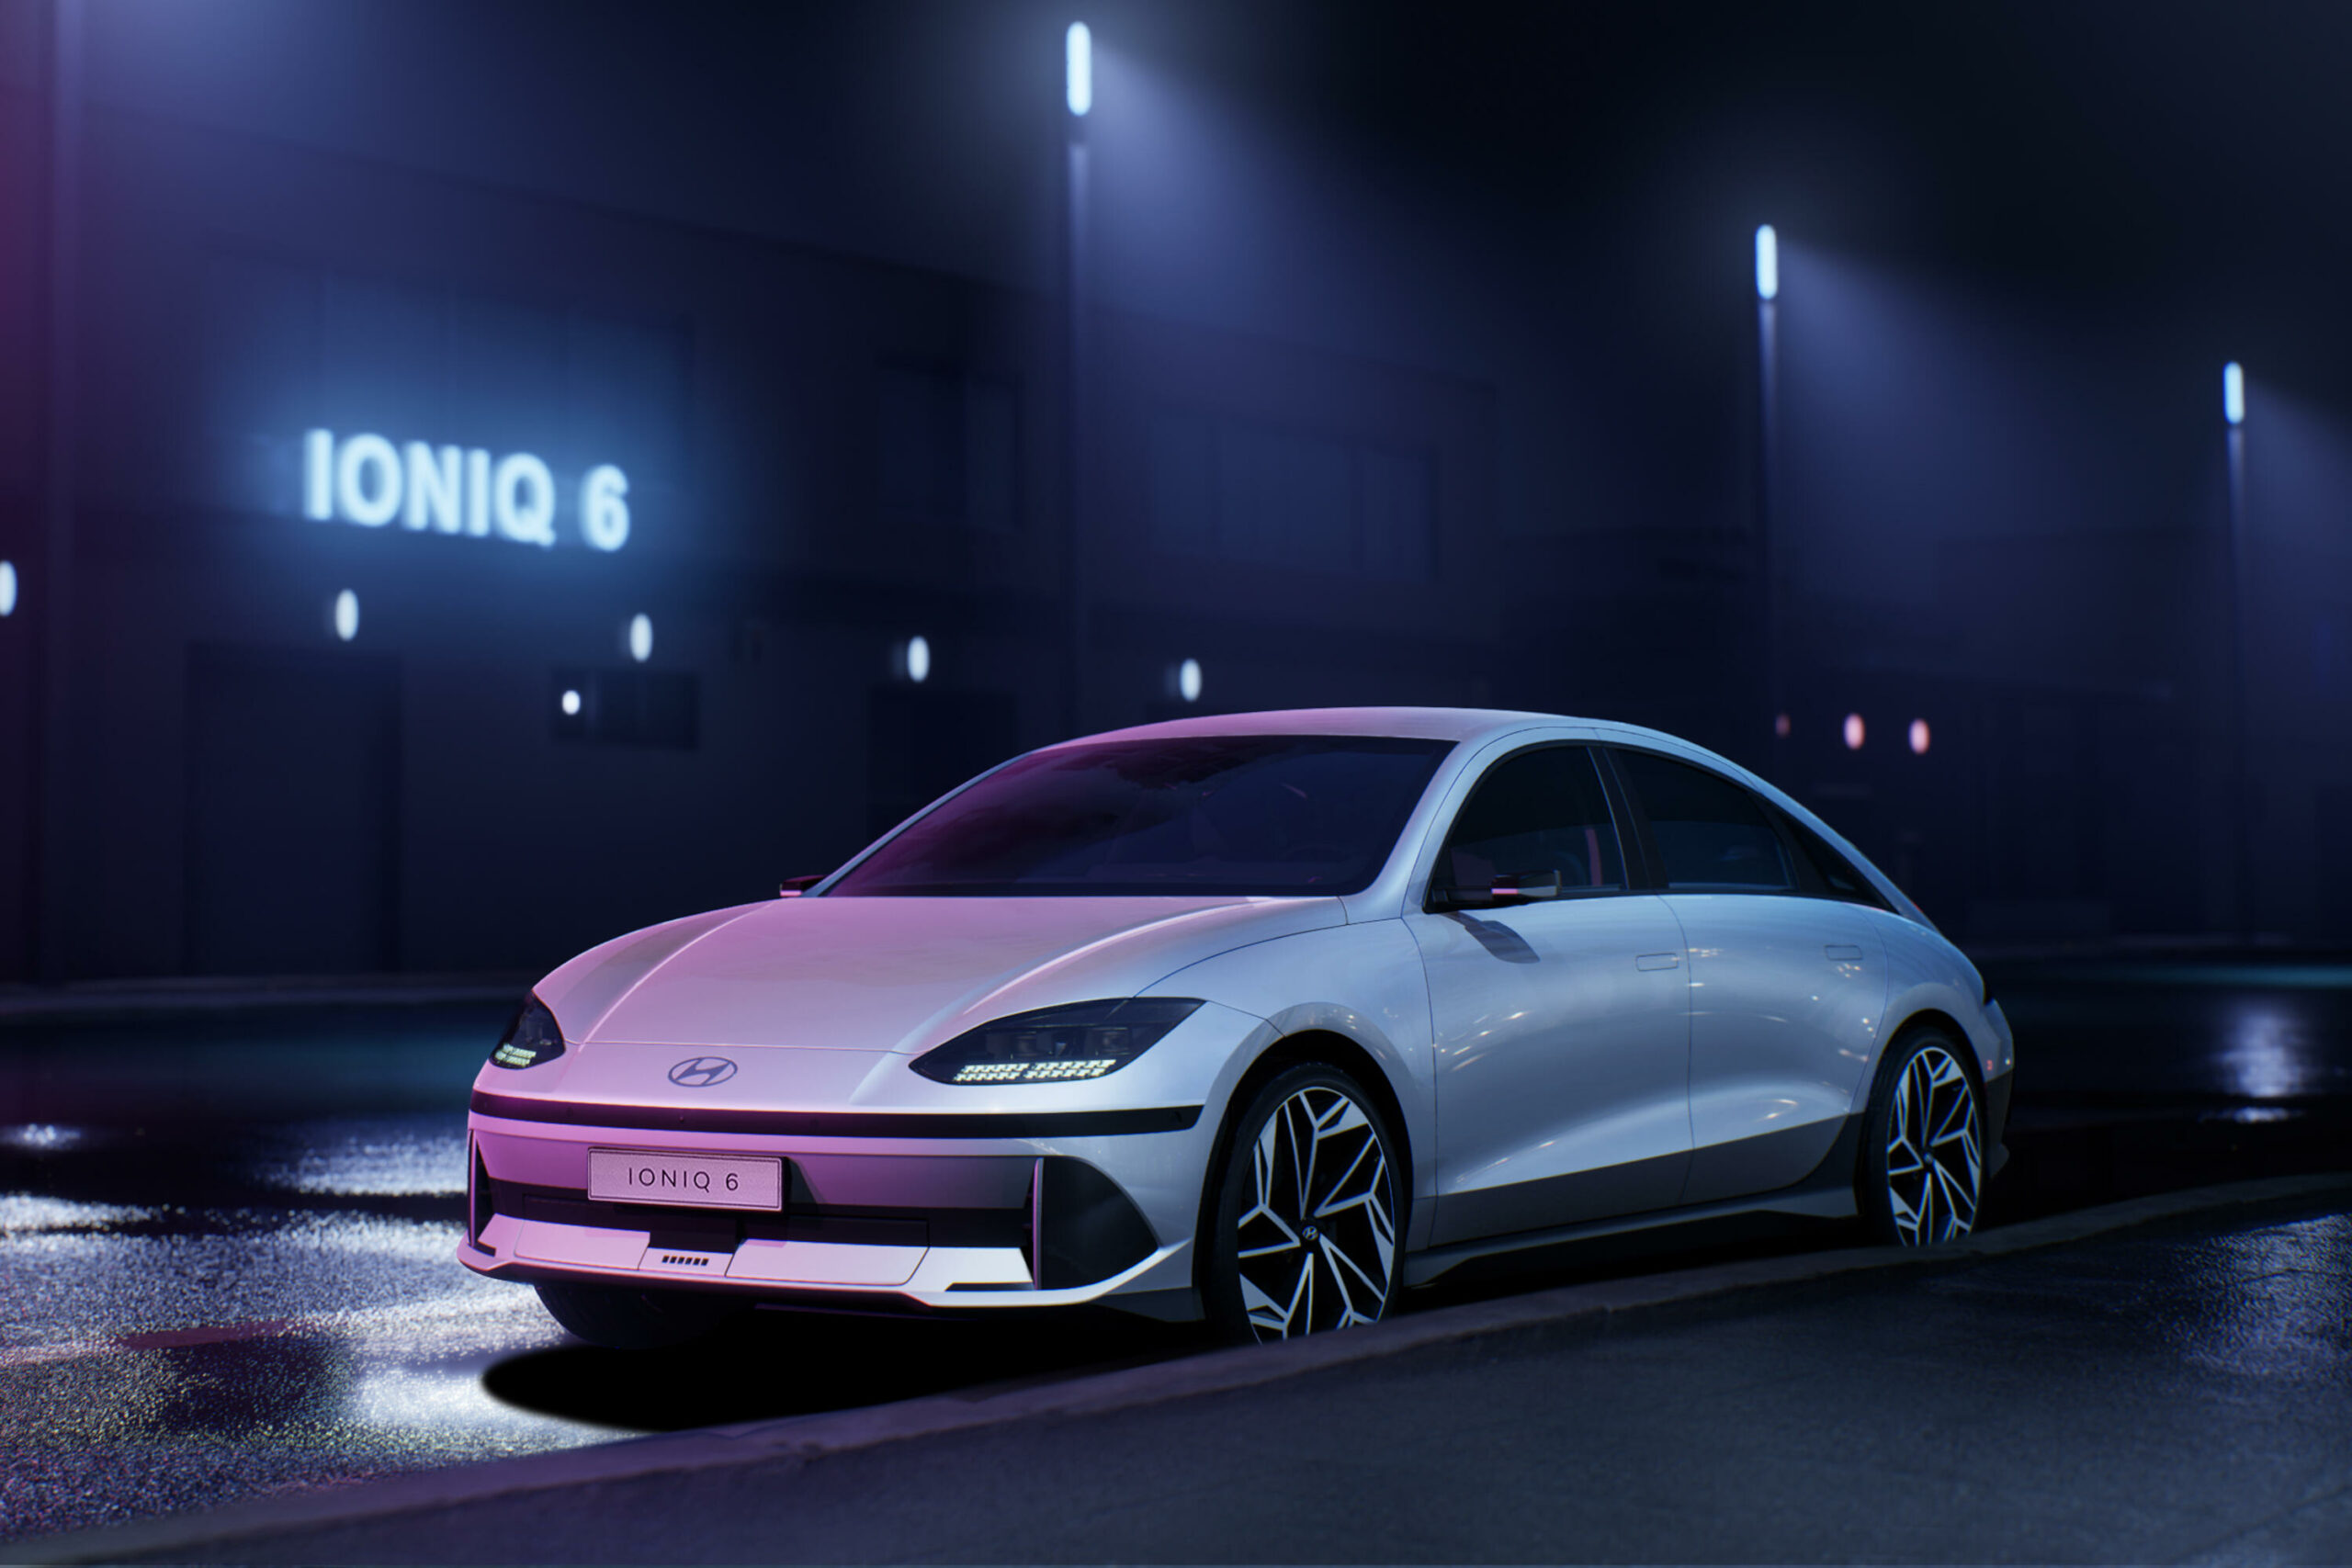 The Hyundai Ioniq 6 makes its debut as a fantastic electric sedan